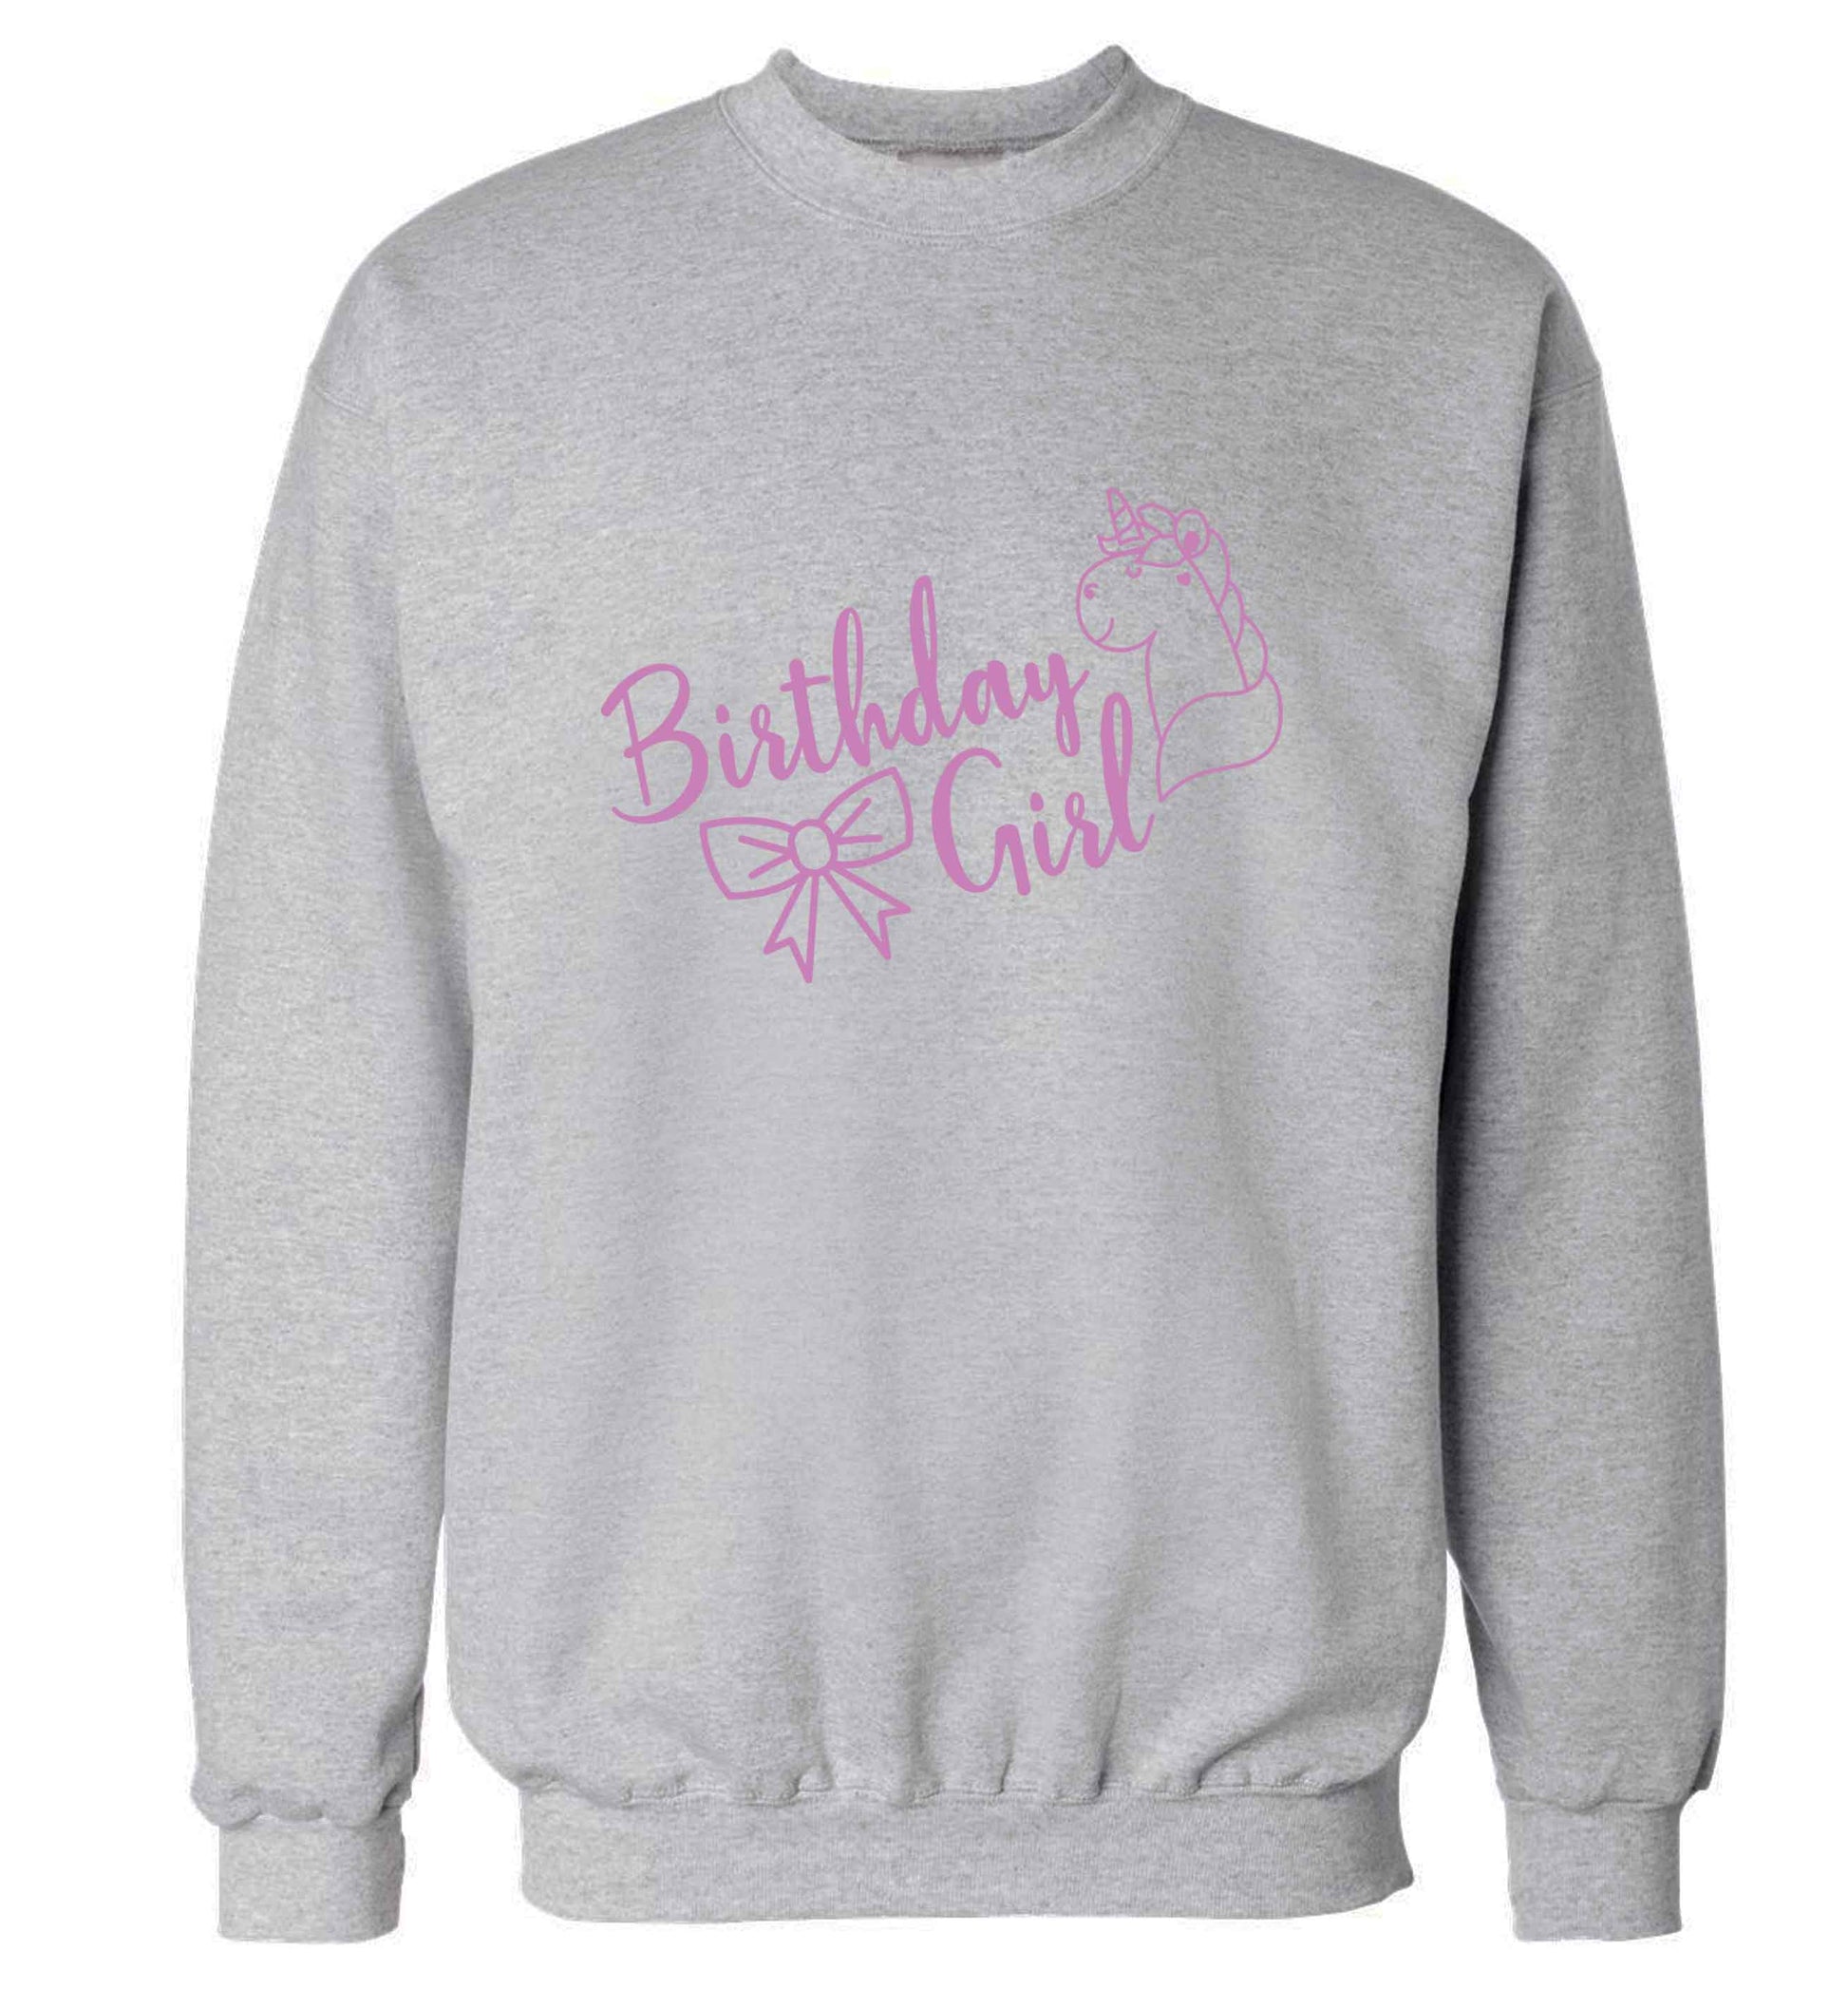 Birthday girl adult's unisex grey sweater 2XL